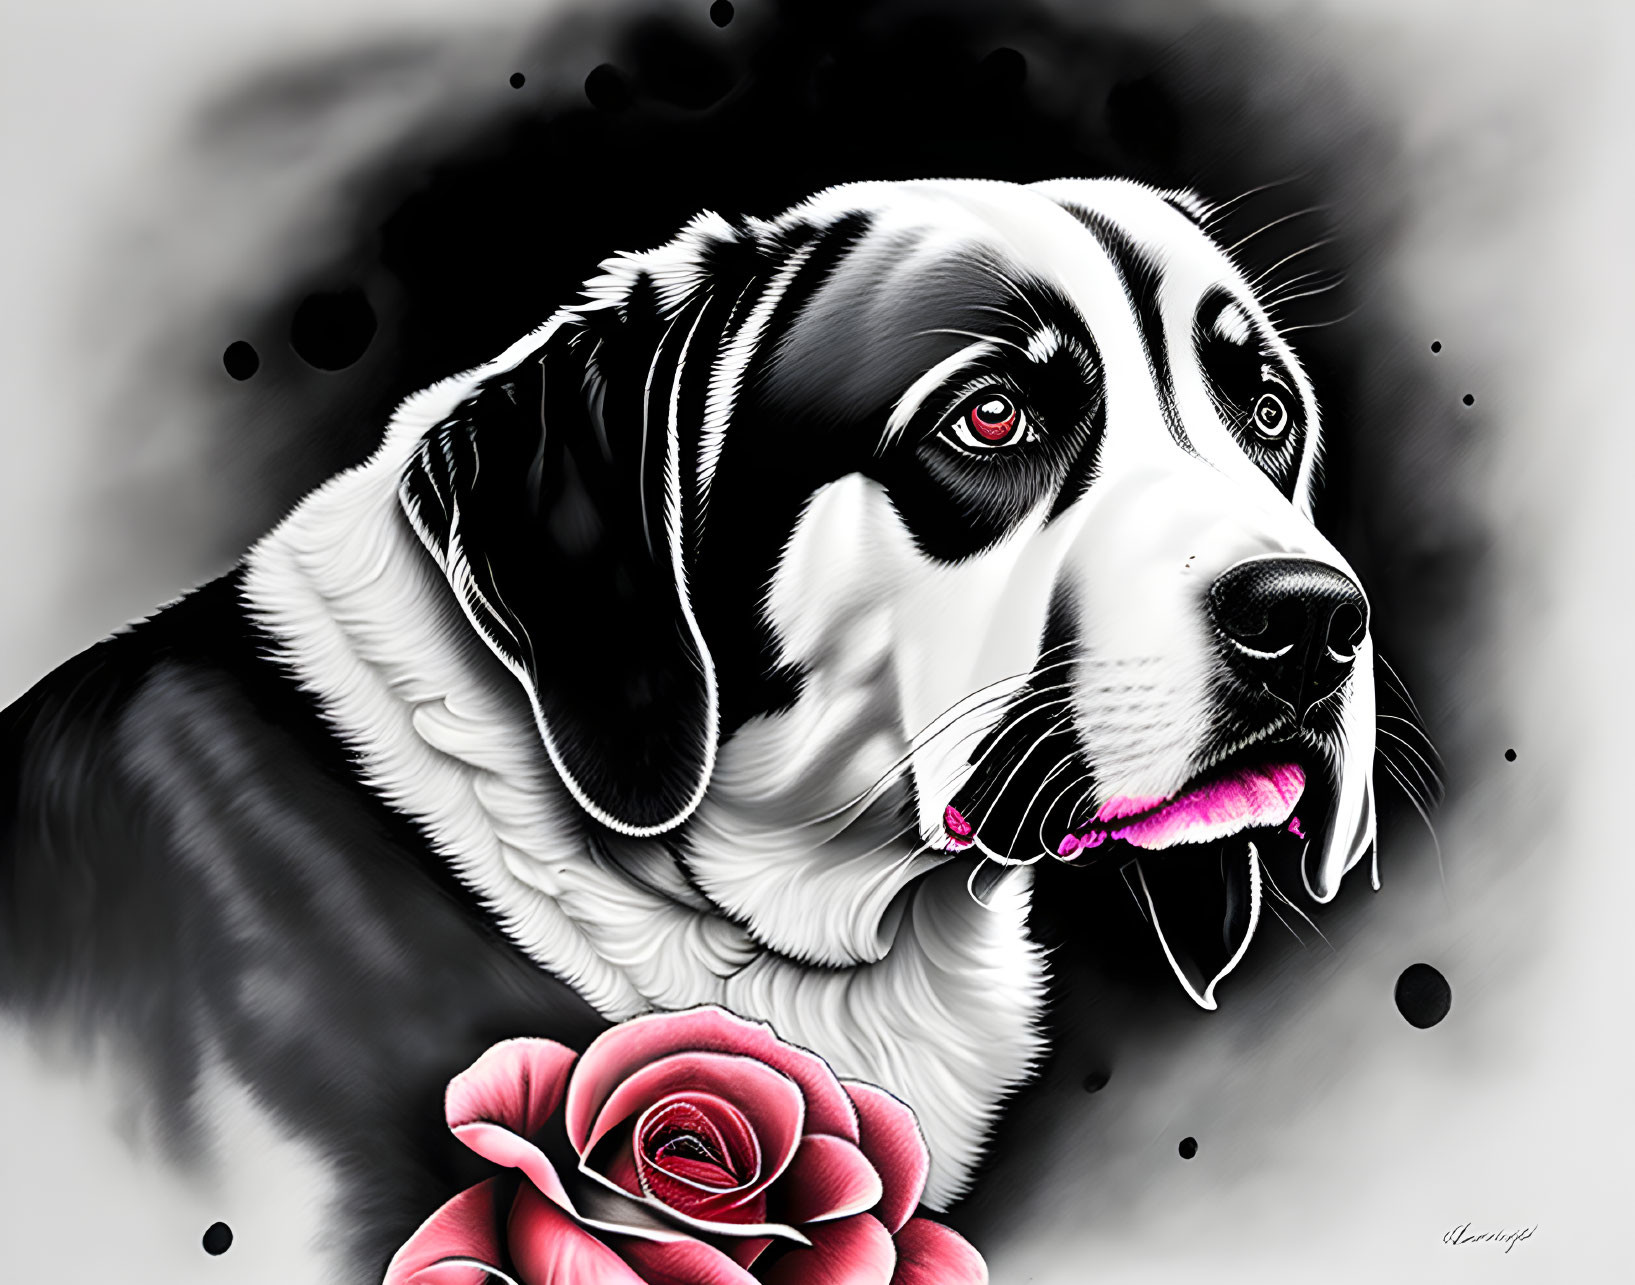 Monochrome dog portrait with pink rose in digital art